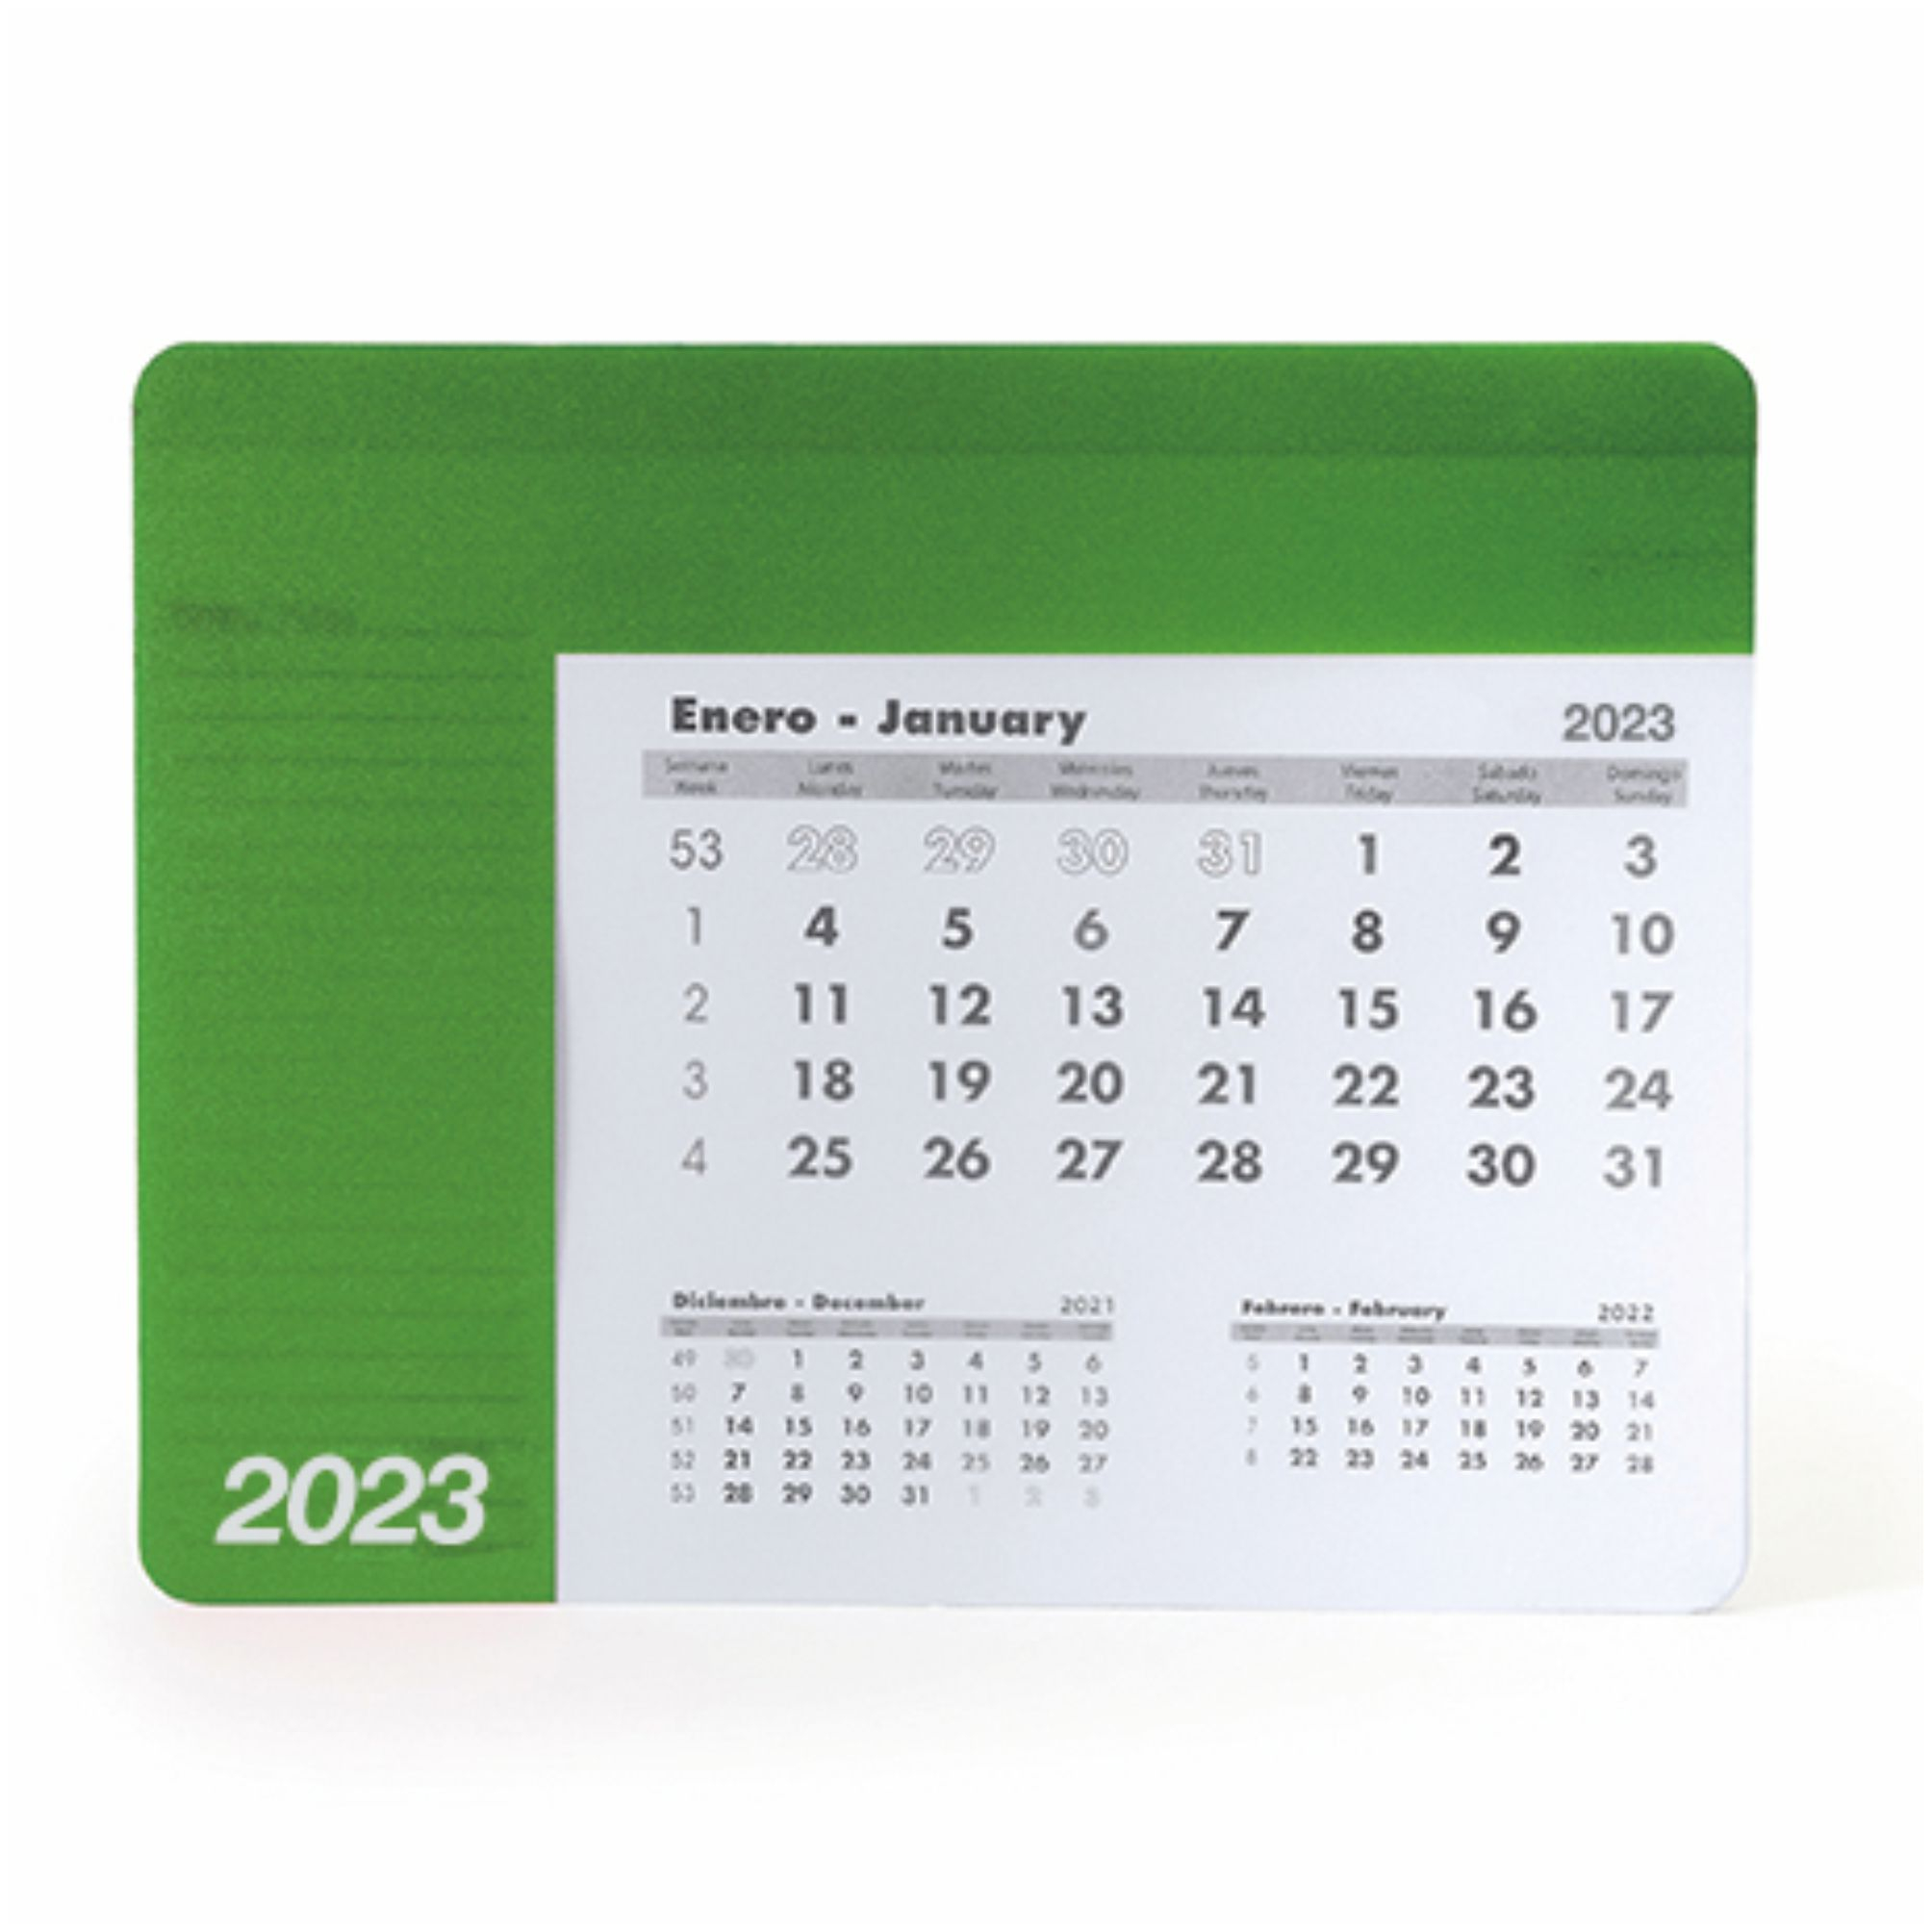 2576-magic-tappetino-per-mouse-con-calendario-verde-felce.jpg